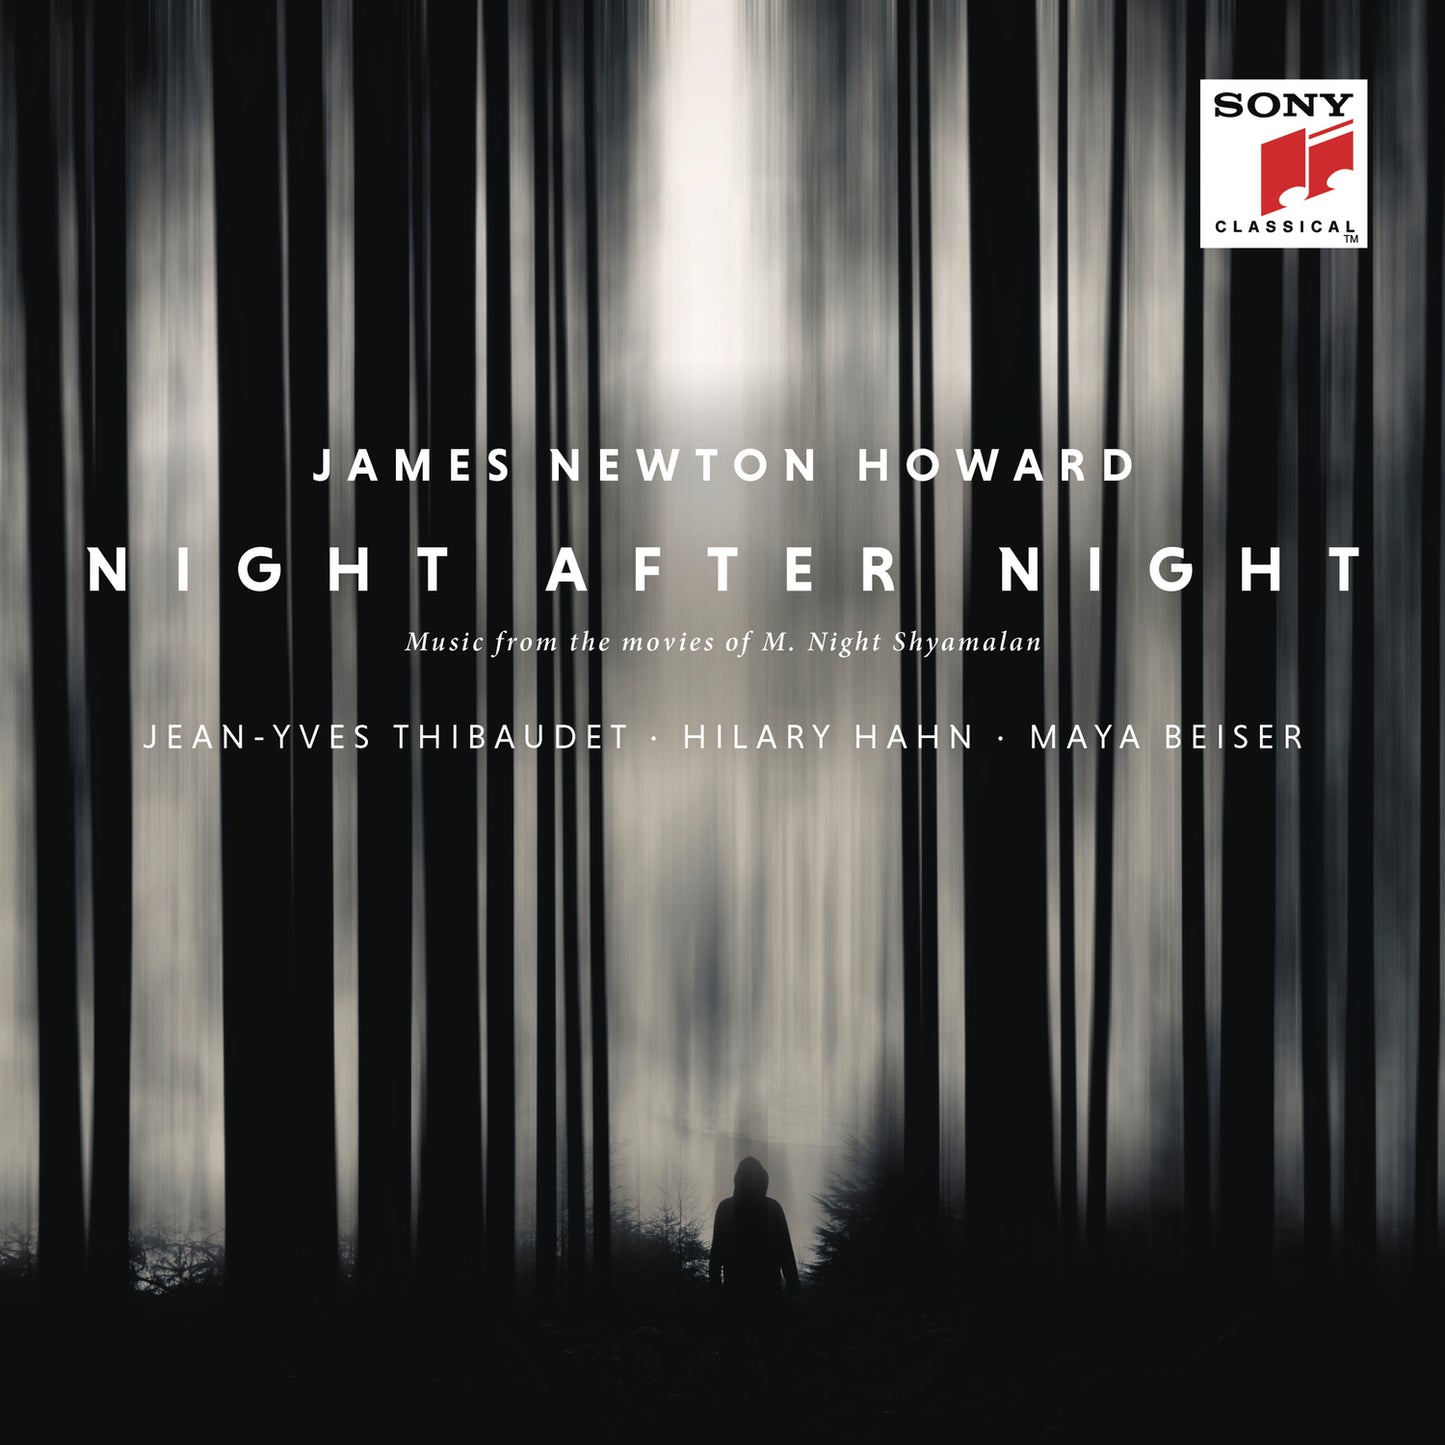 Night After Night (Music of M. Night Shyamalan) / James Newton Howard (LP)